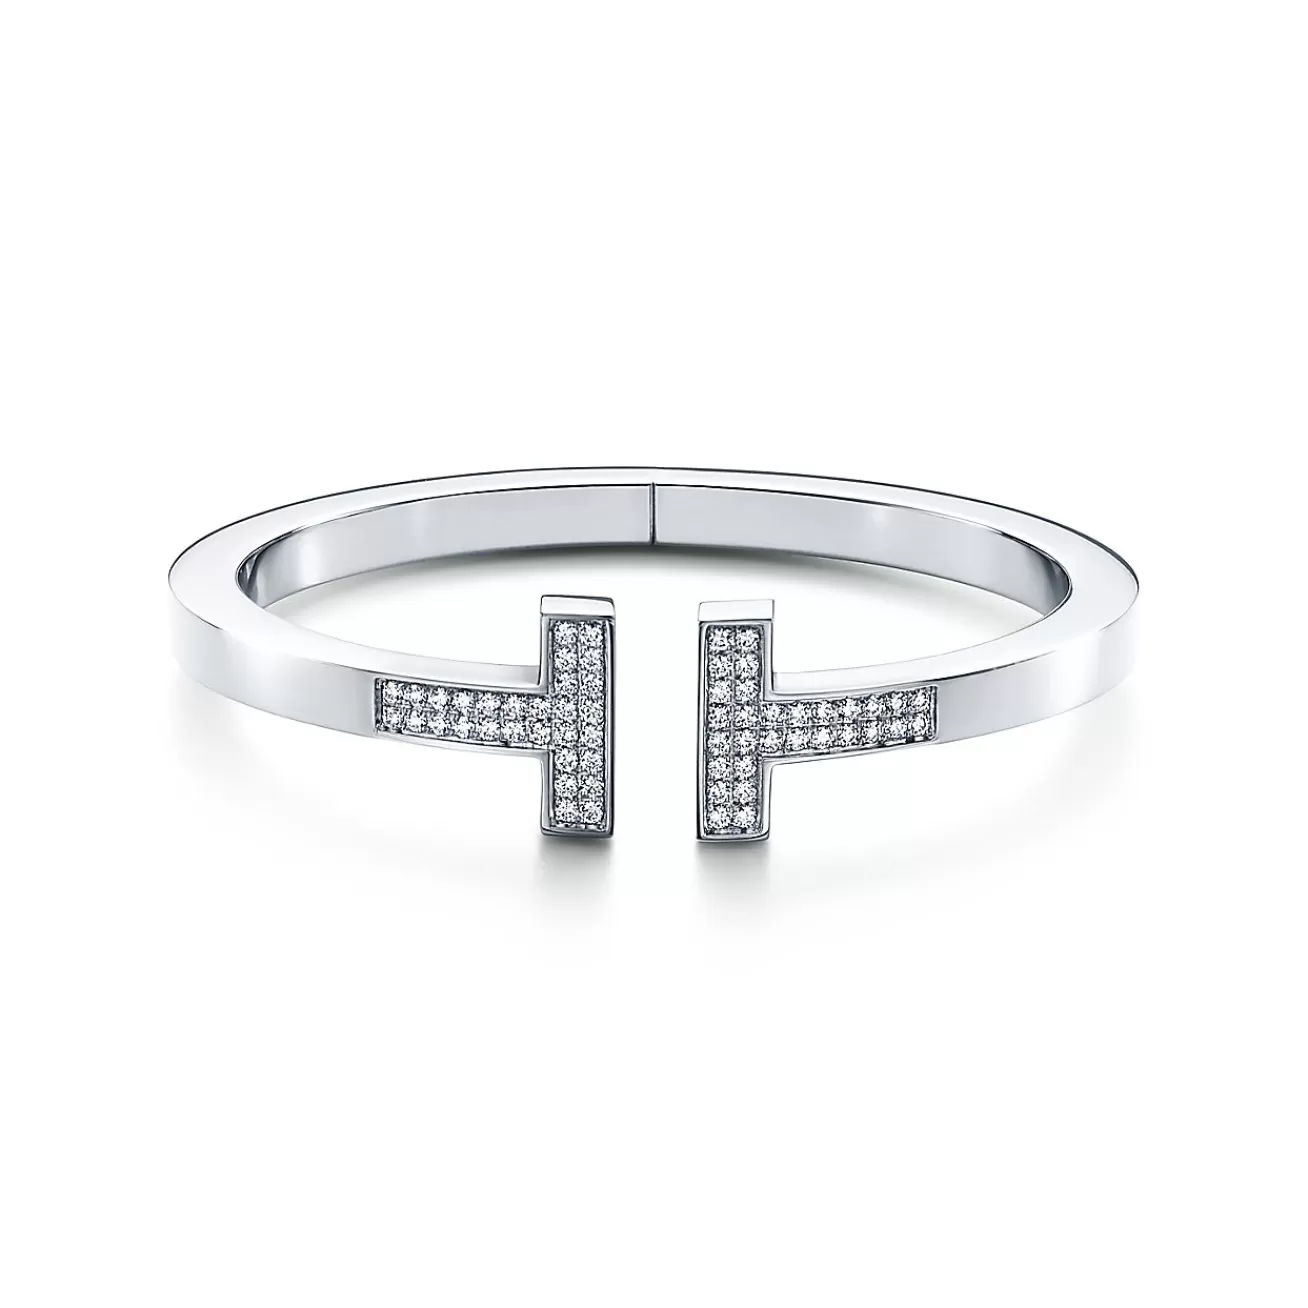 Tiffany & Co. Tiffany T pavé diamond square bracelet in 18k white gold, medium. | ^ Bracelets | Men's Jewelry